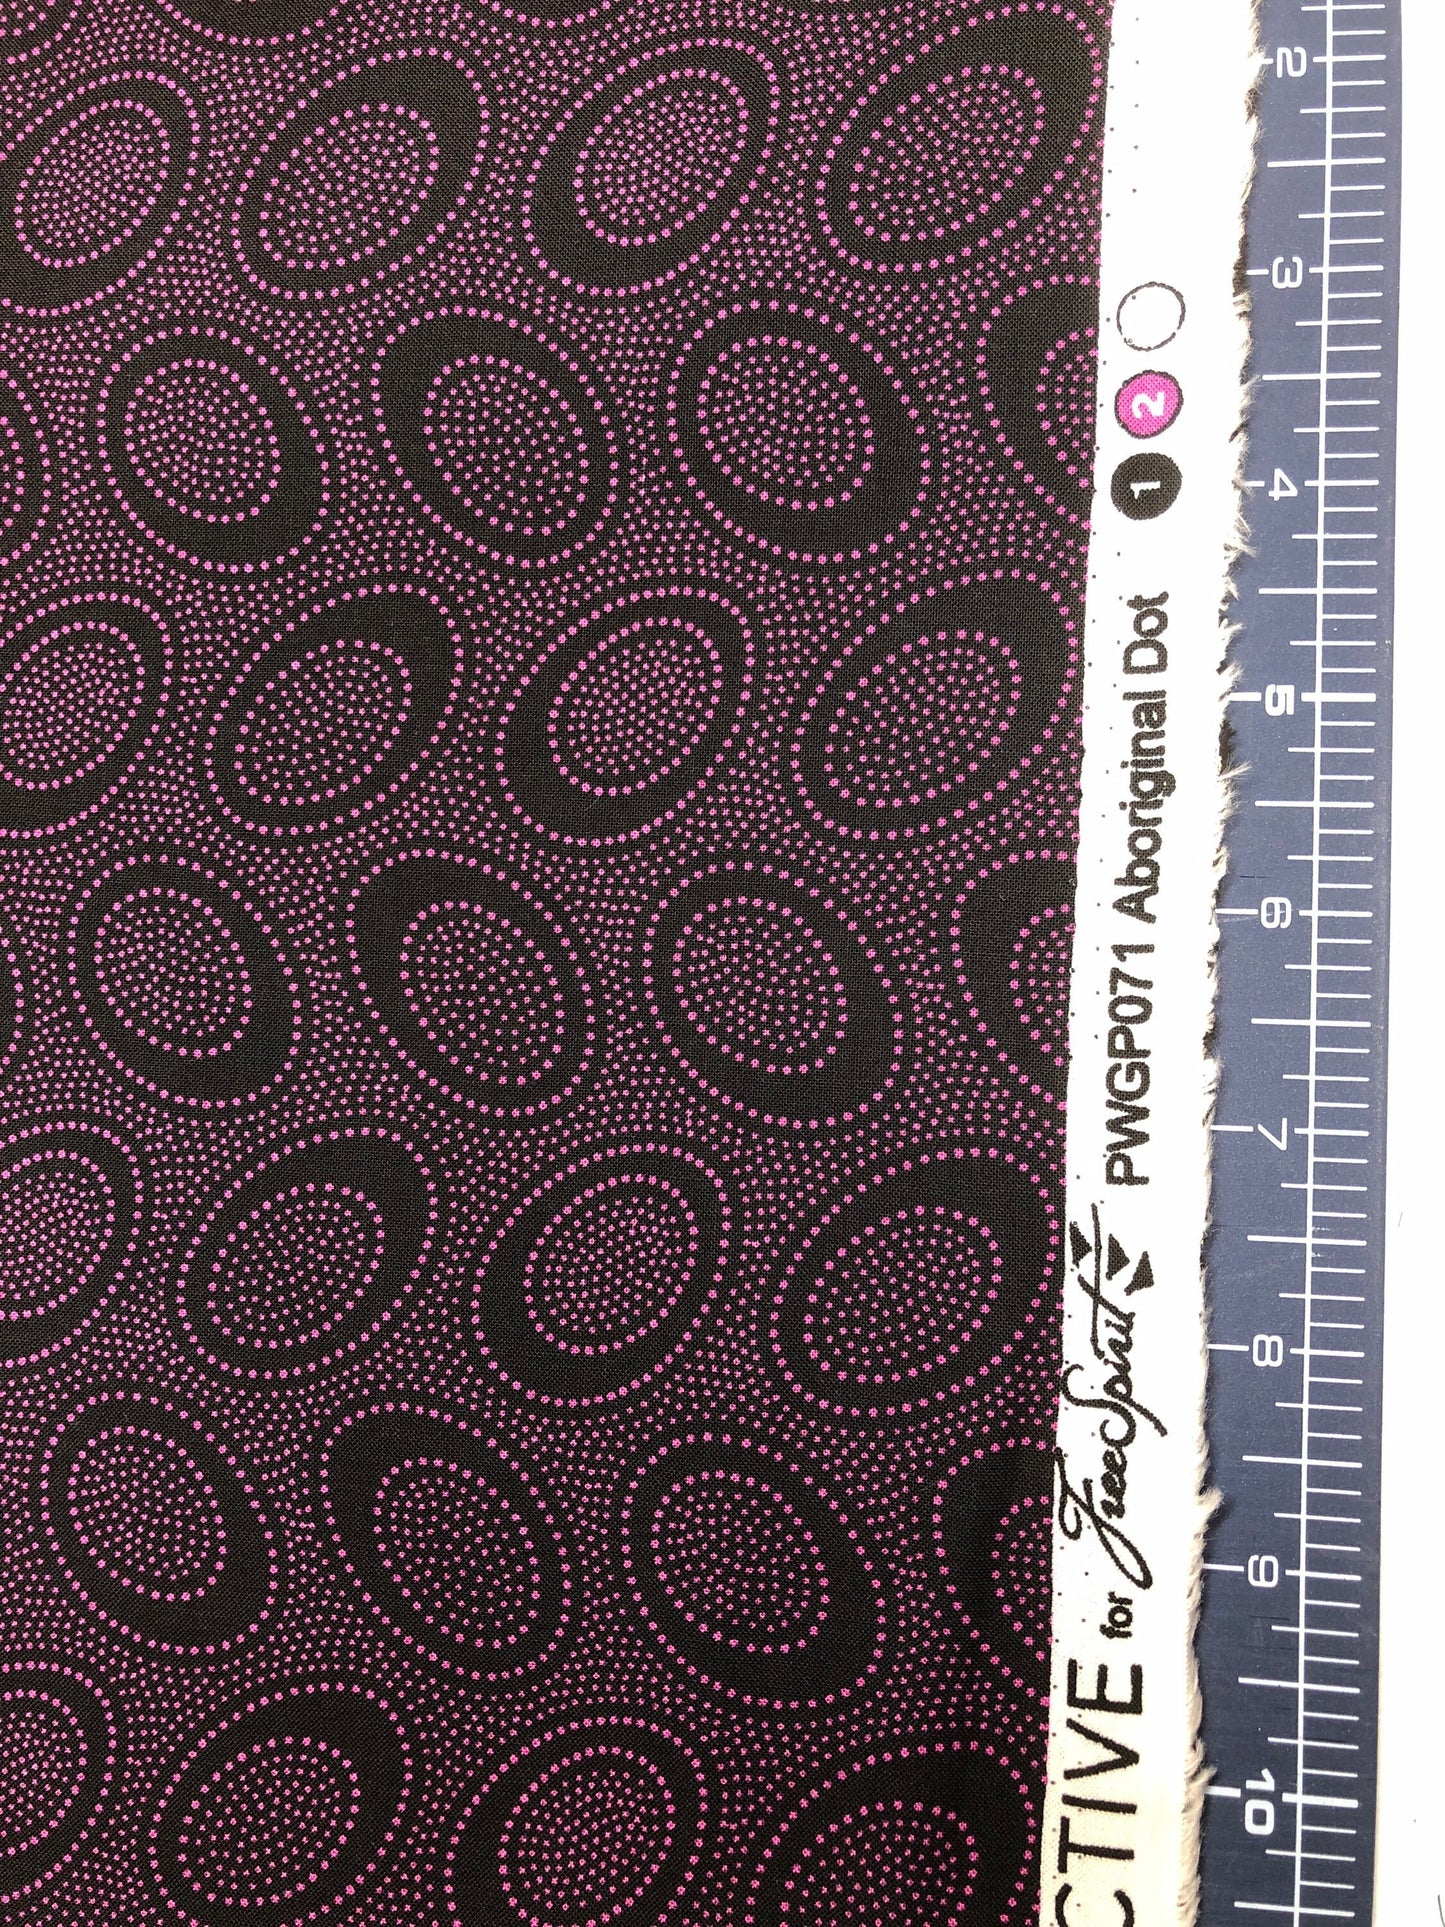 Aboriginal Dot in Orchid GP71, Kaffe Fassett Fabric, Quilt Fabric, Cotton Fabric, Blender Fabric, Quilting Fabric, Fabric By The Yard